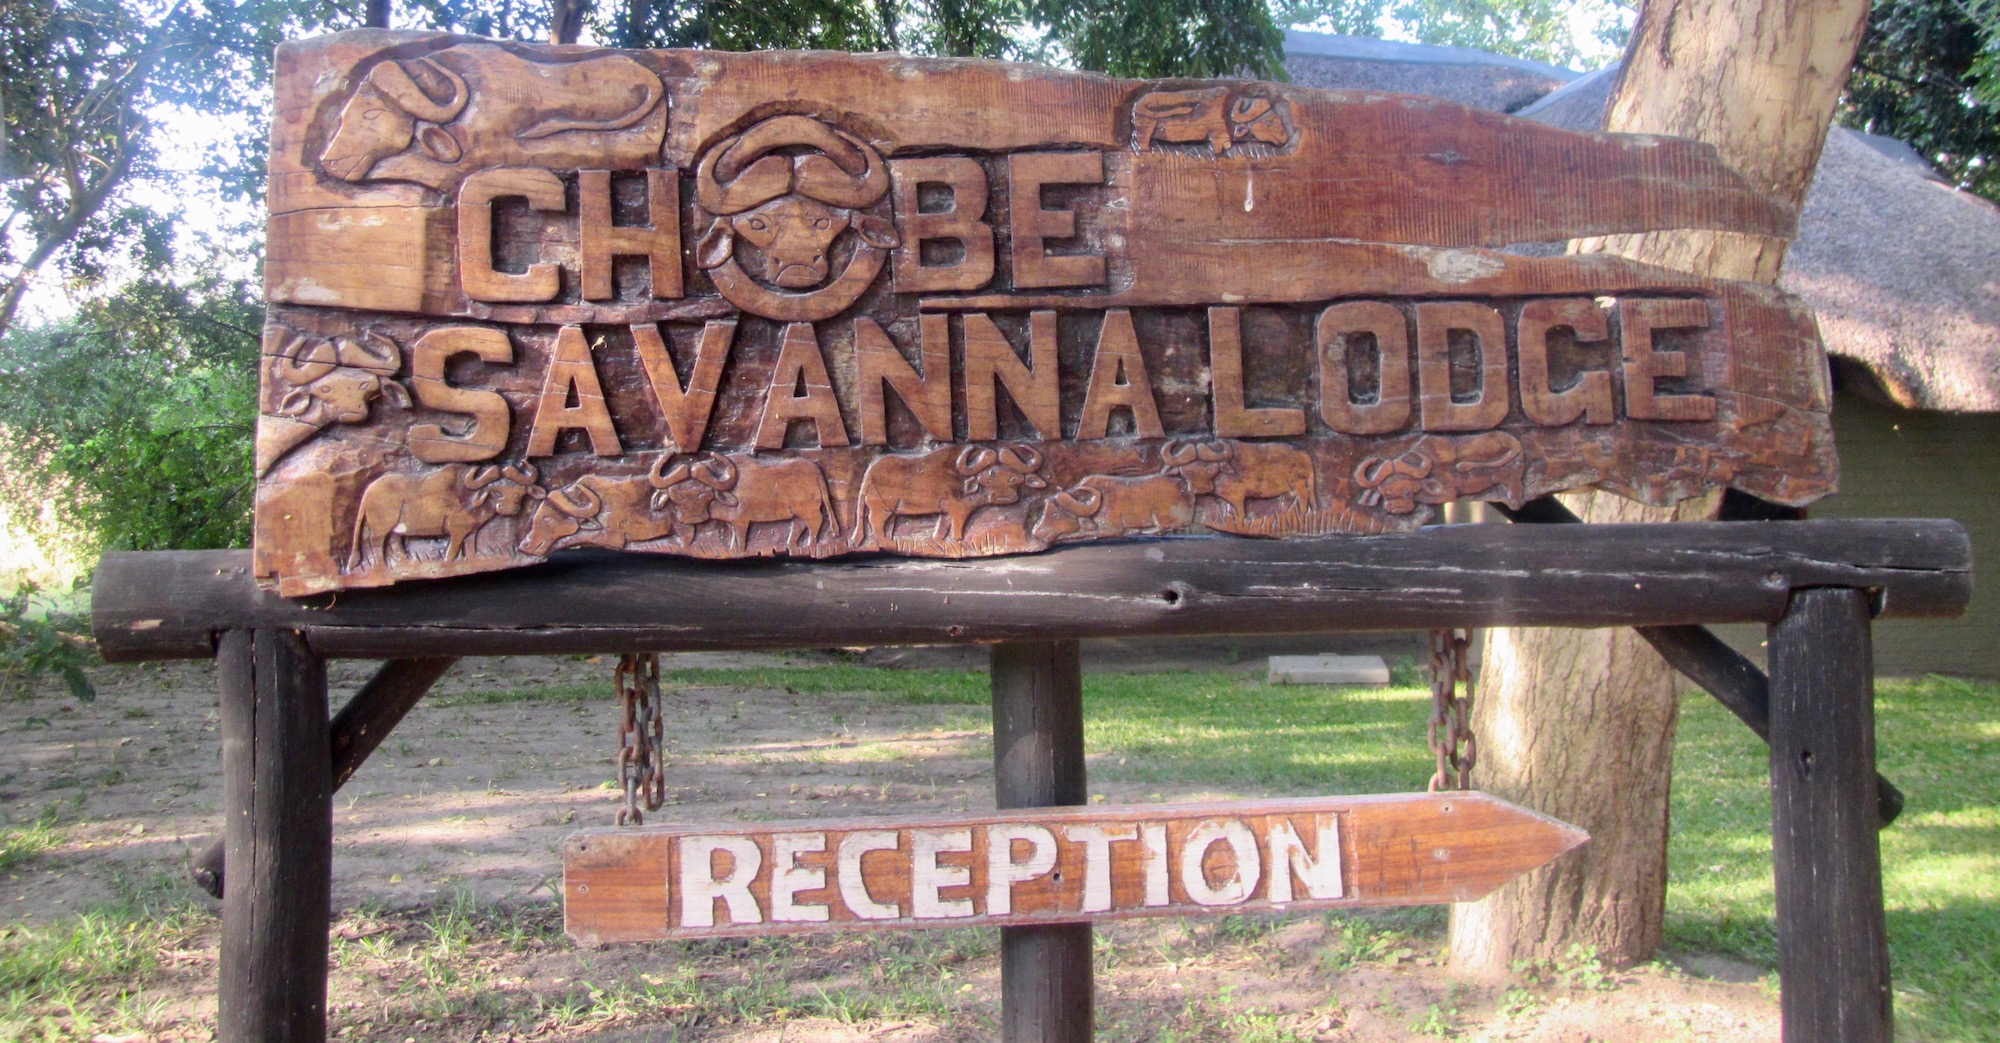 Sign for Chobe Savanna Lodge